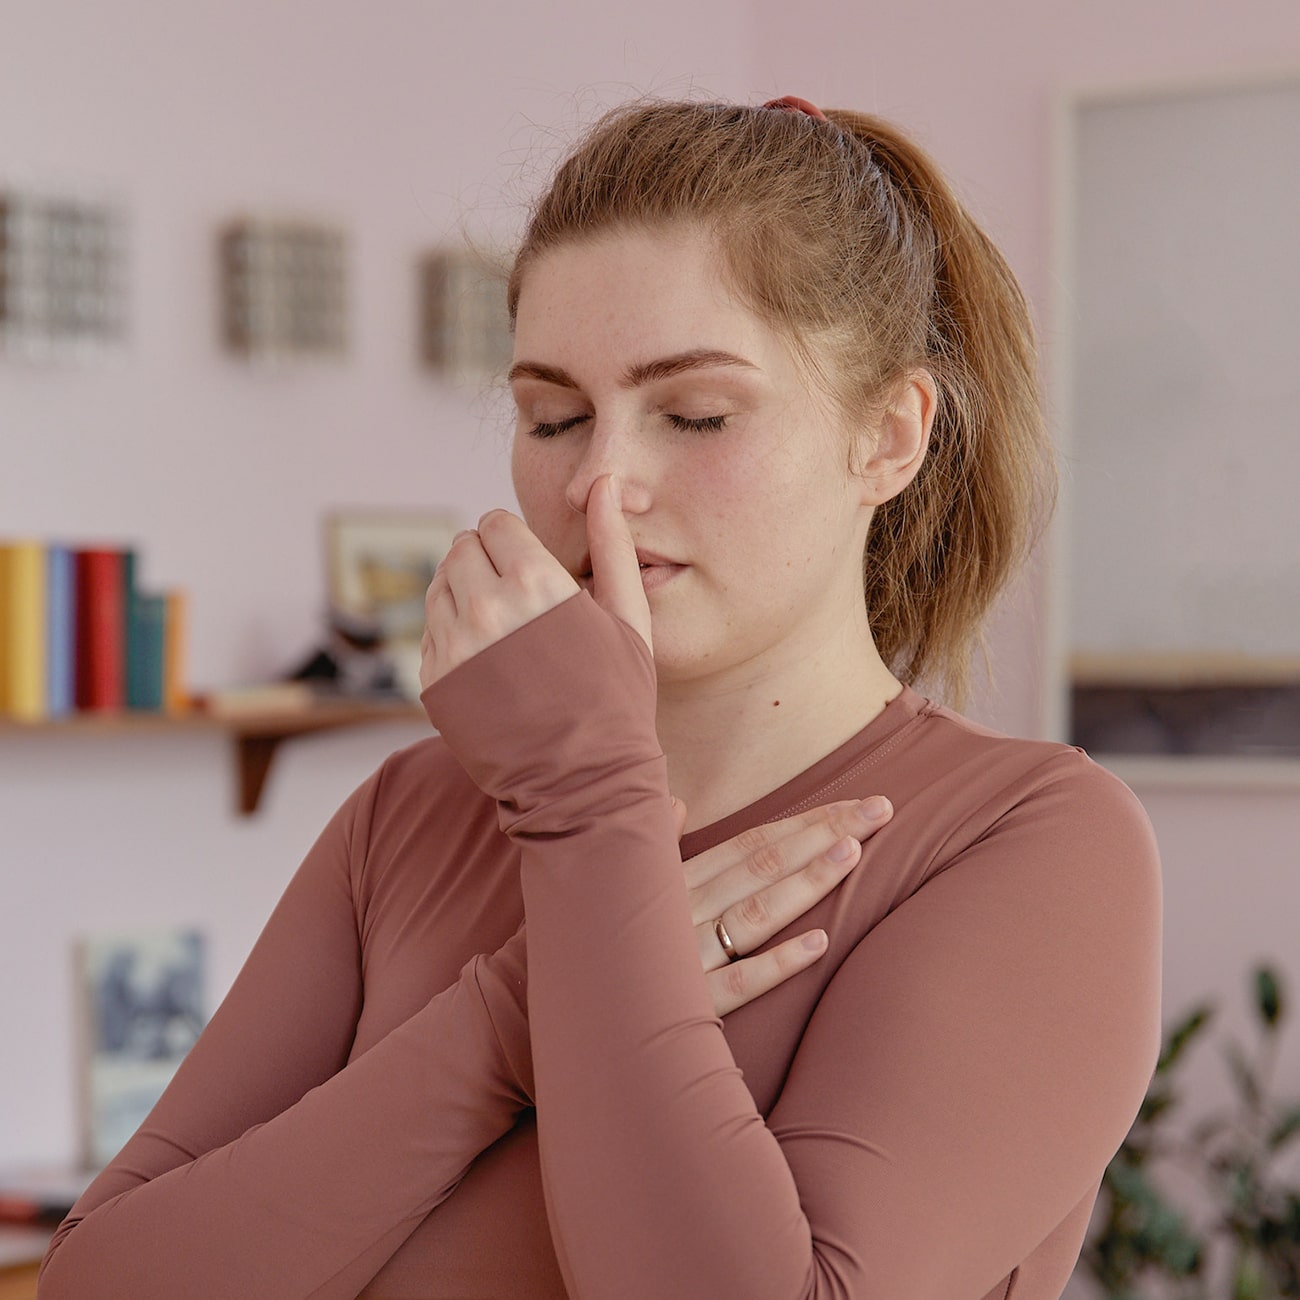 Breathwork practices for alleviating stress